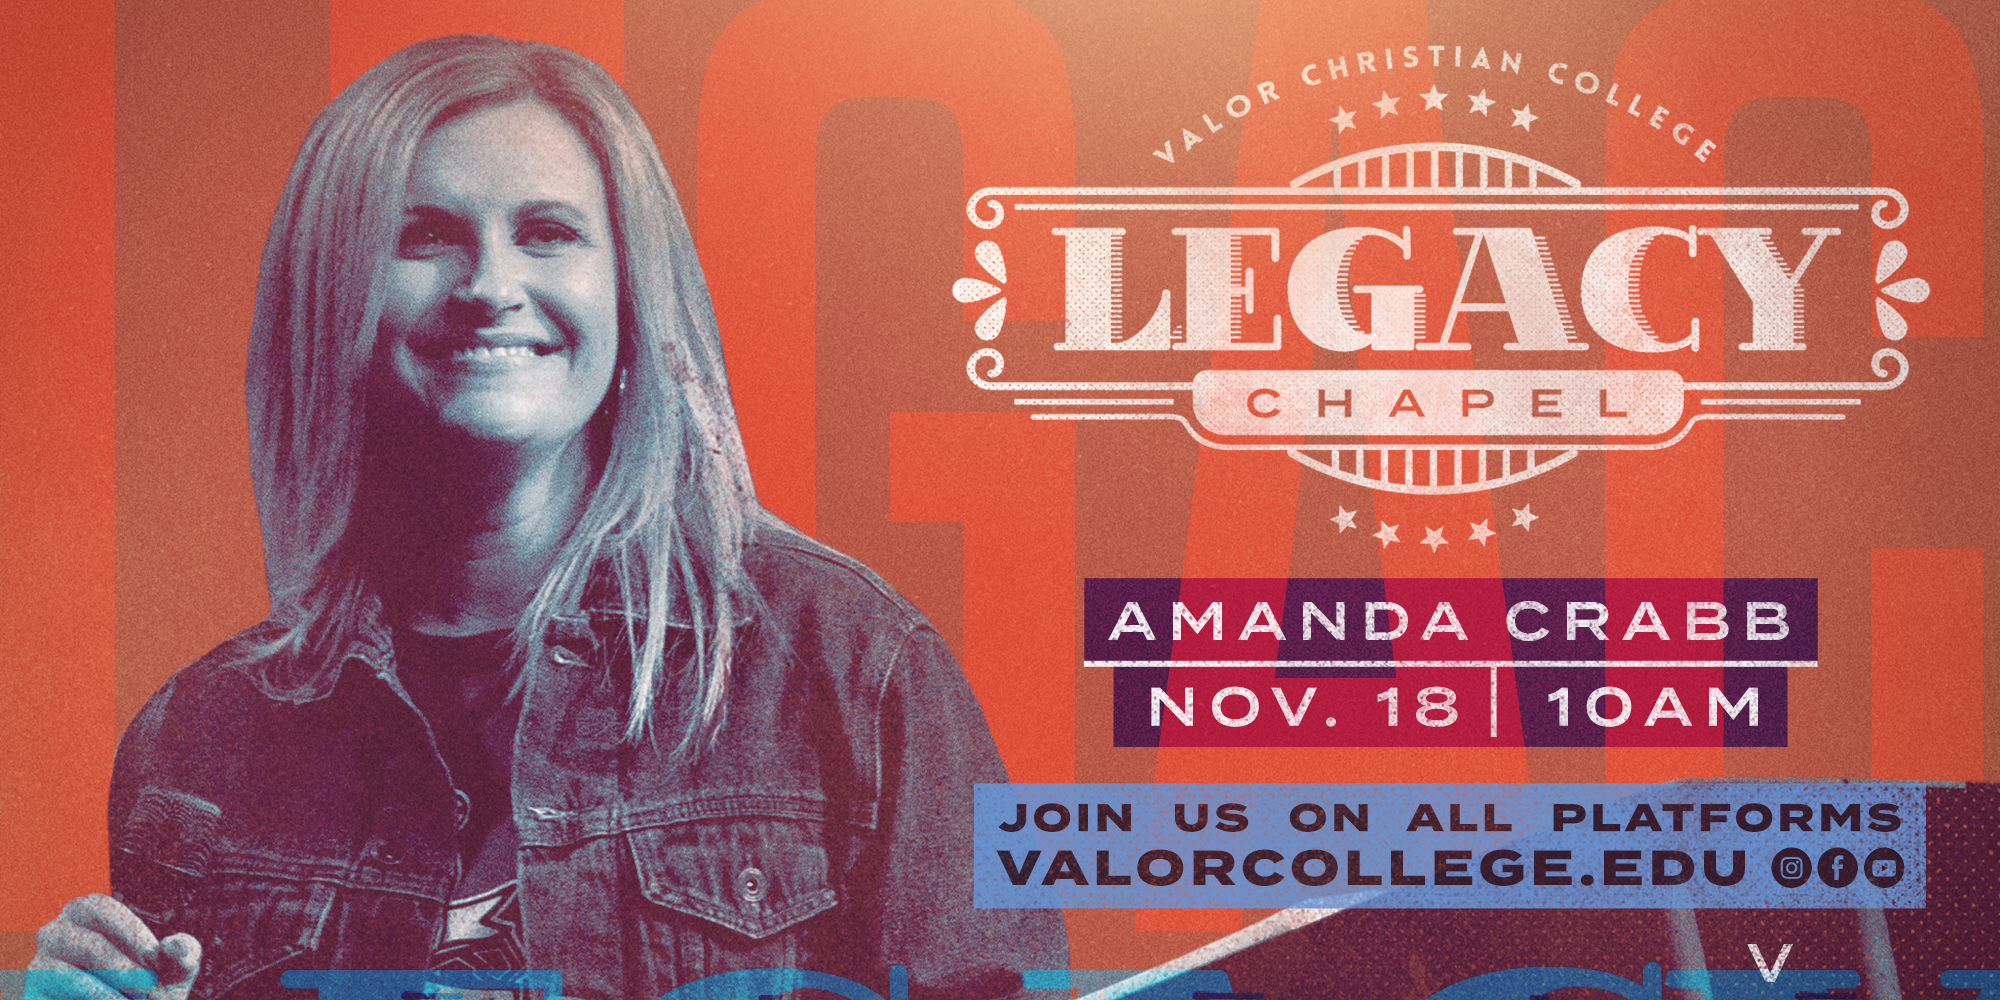 Valor Christian College Legacy Chapel Amanda Crabb November 18th 10AM Join us on all platforms valorcollege.edu Instagram Facebook Youtube